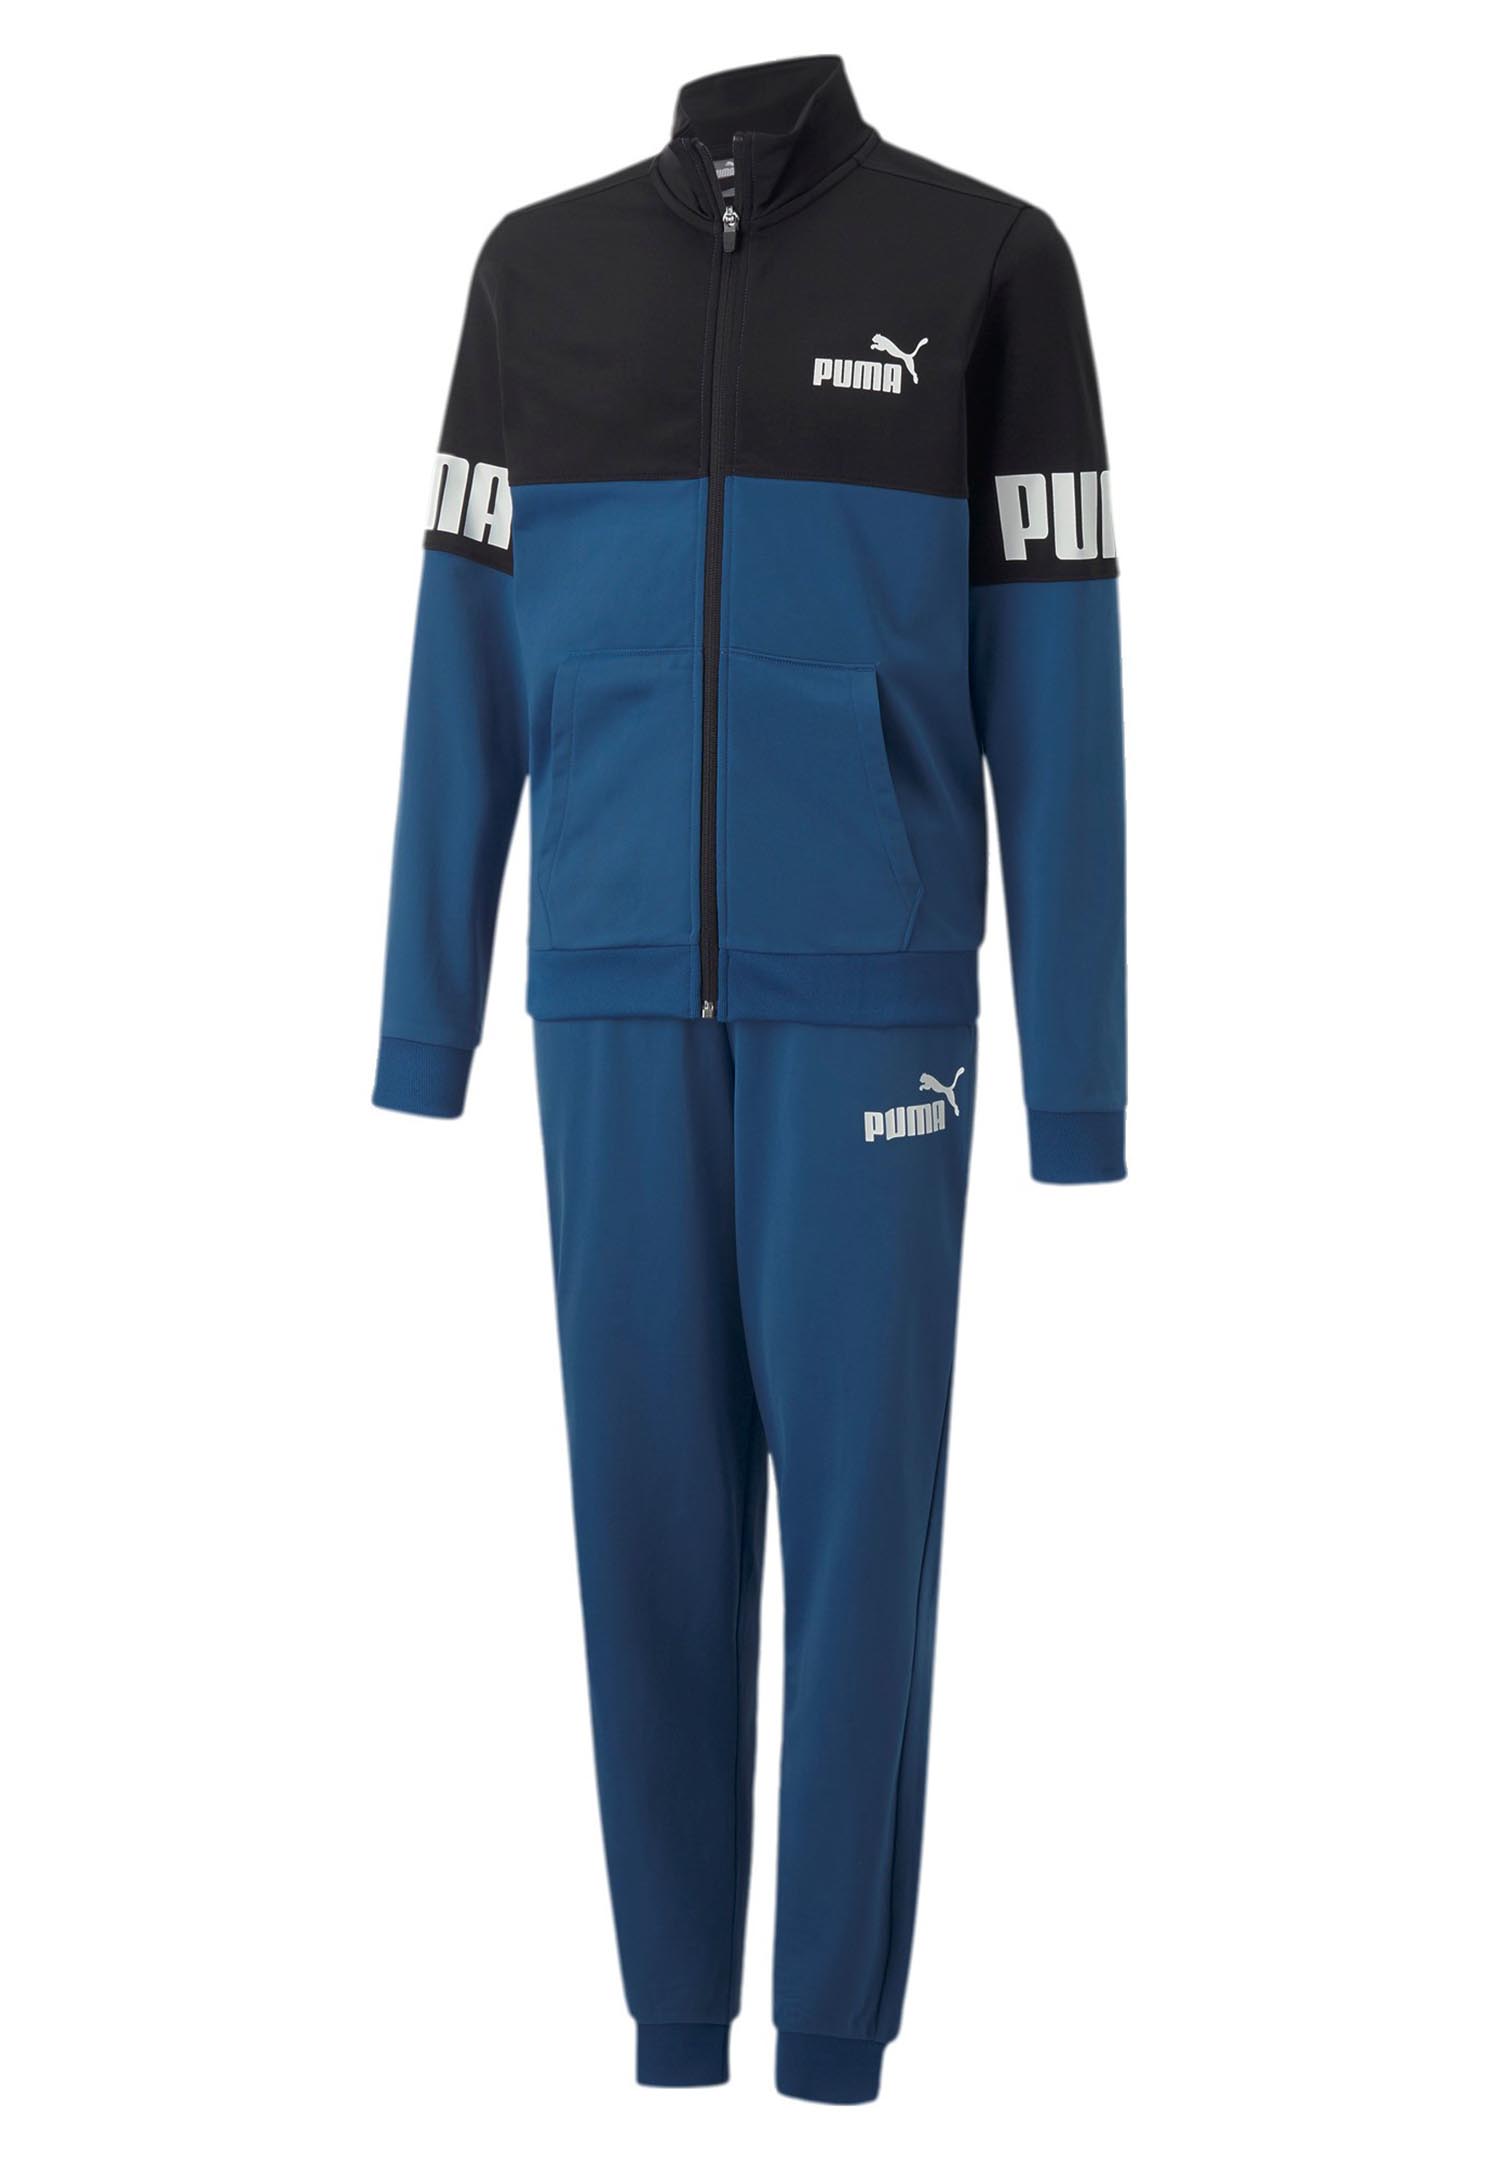 Puma Power Poly Suit B Kinder Unisex Trainingsanzug Sportanzug 670115 17 Blau 